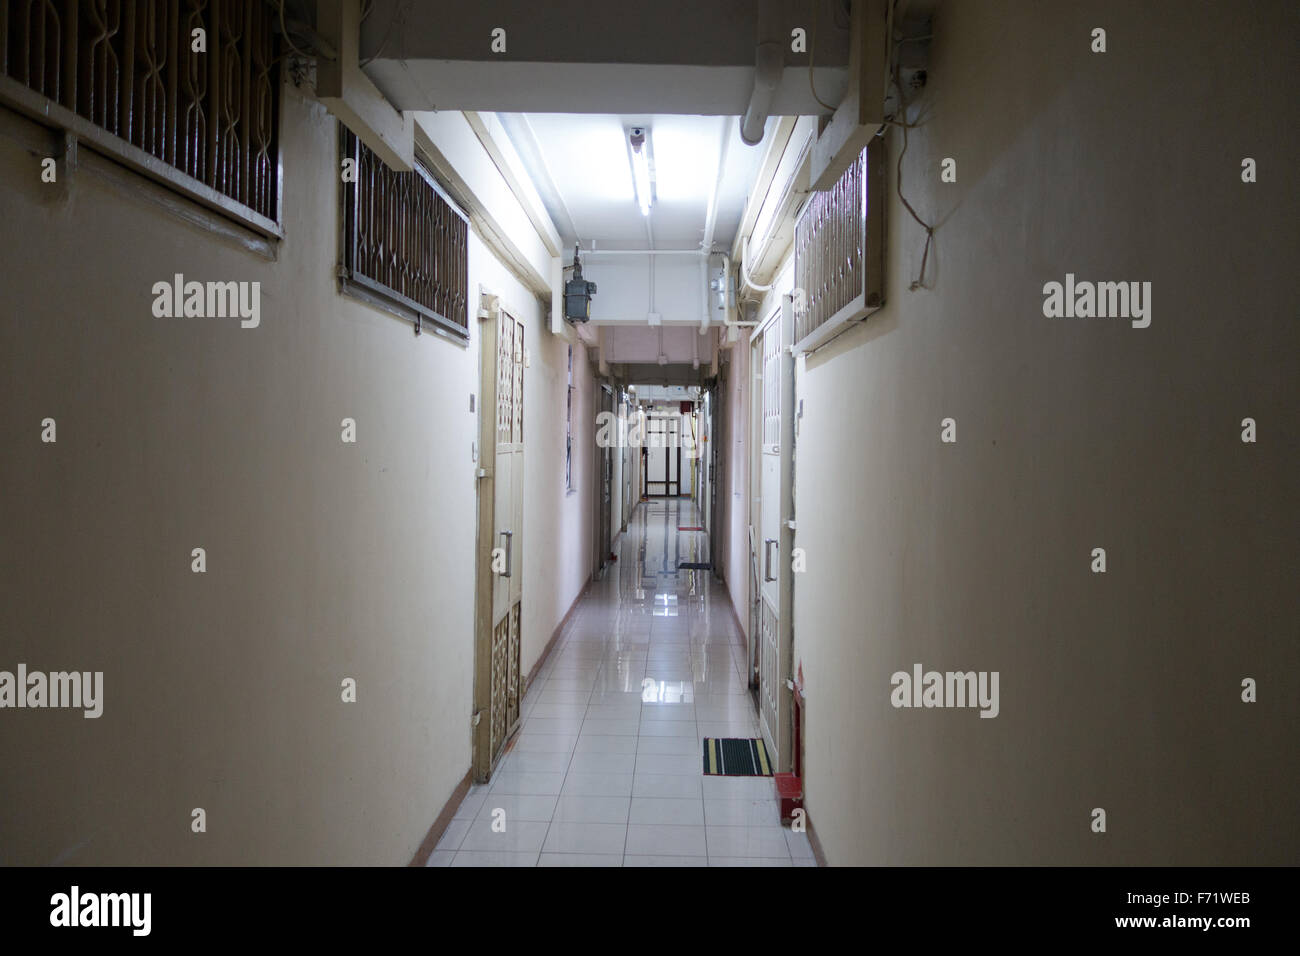 hong kong apartment hallway Stock Photo